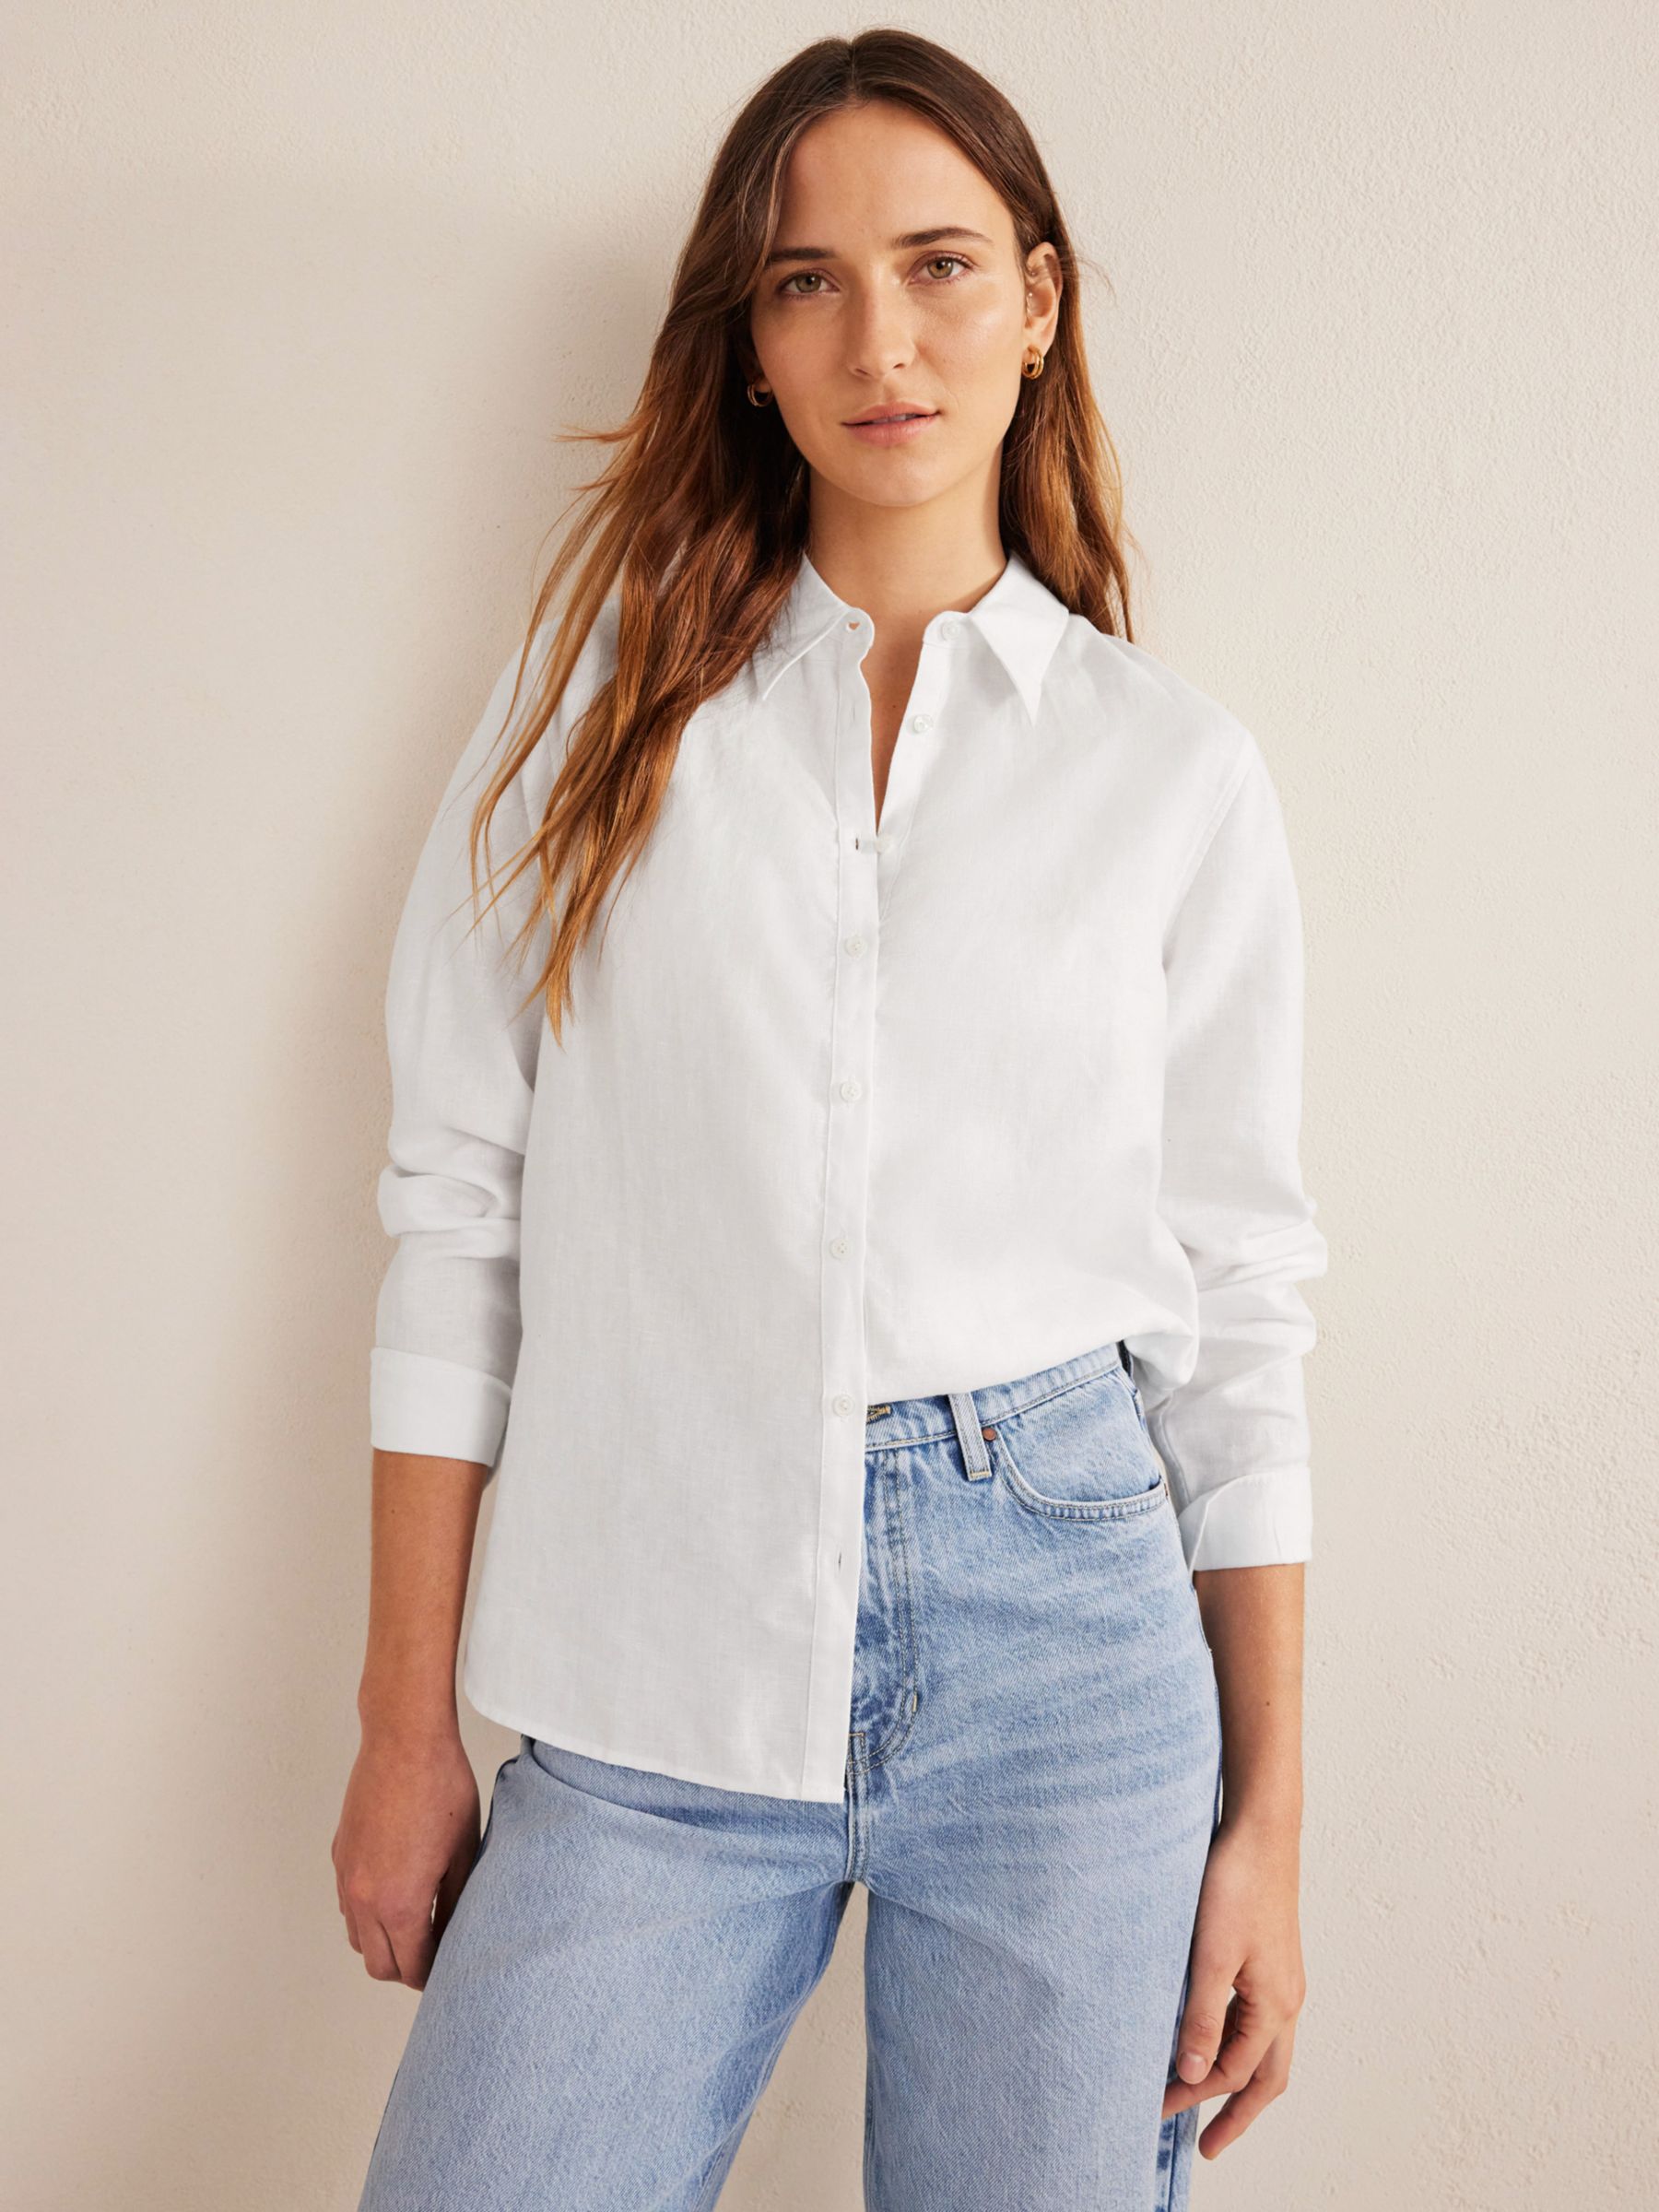 Boden Semi-Fitted Linen Shirt, White